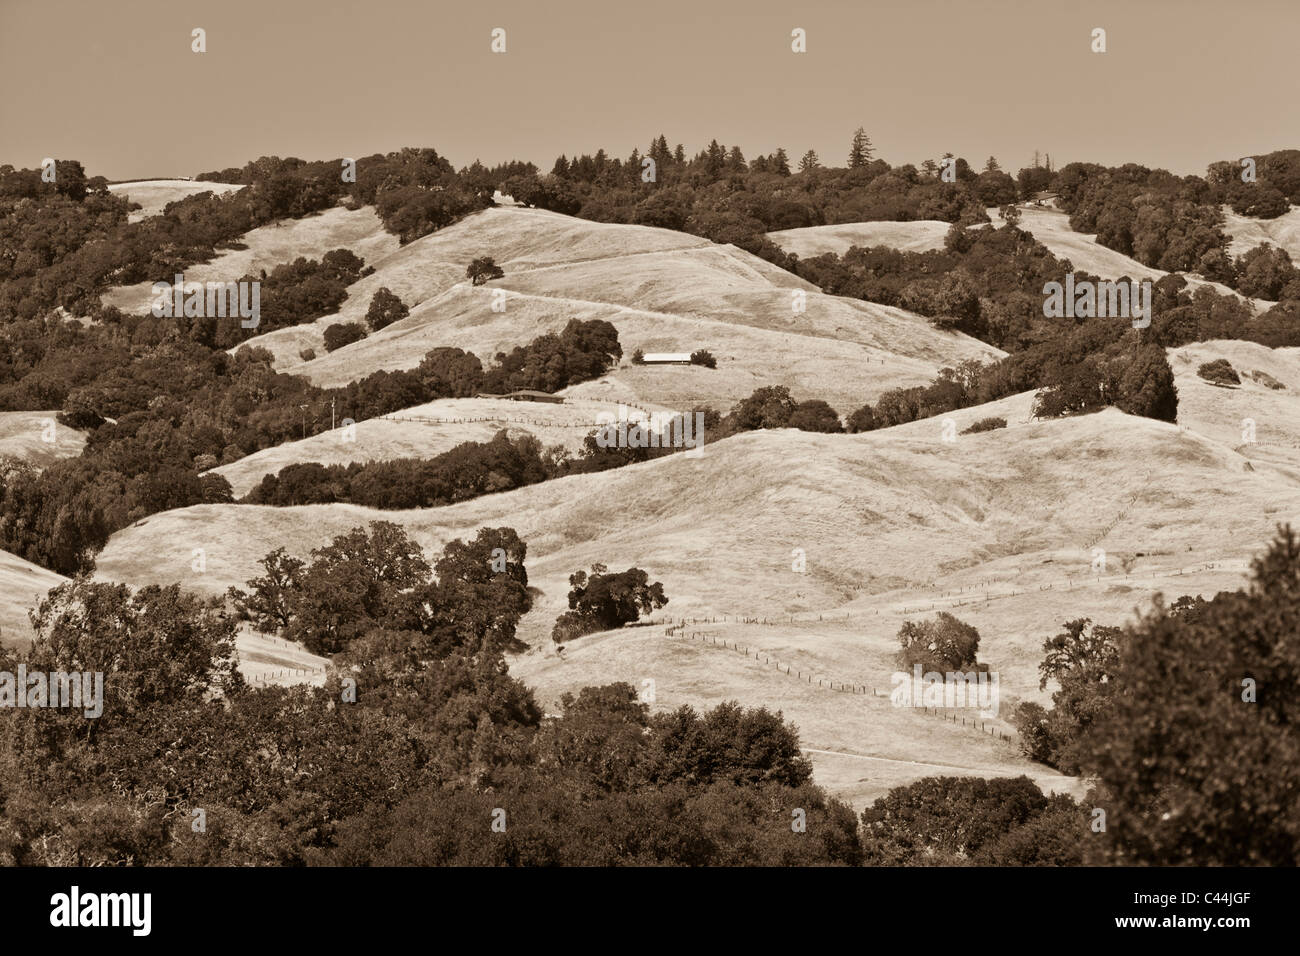 BOONVILLE, CALIFORNIA, USA - Anderson Valley landscape in Mendocino County. Stock Photo